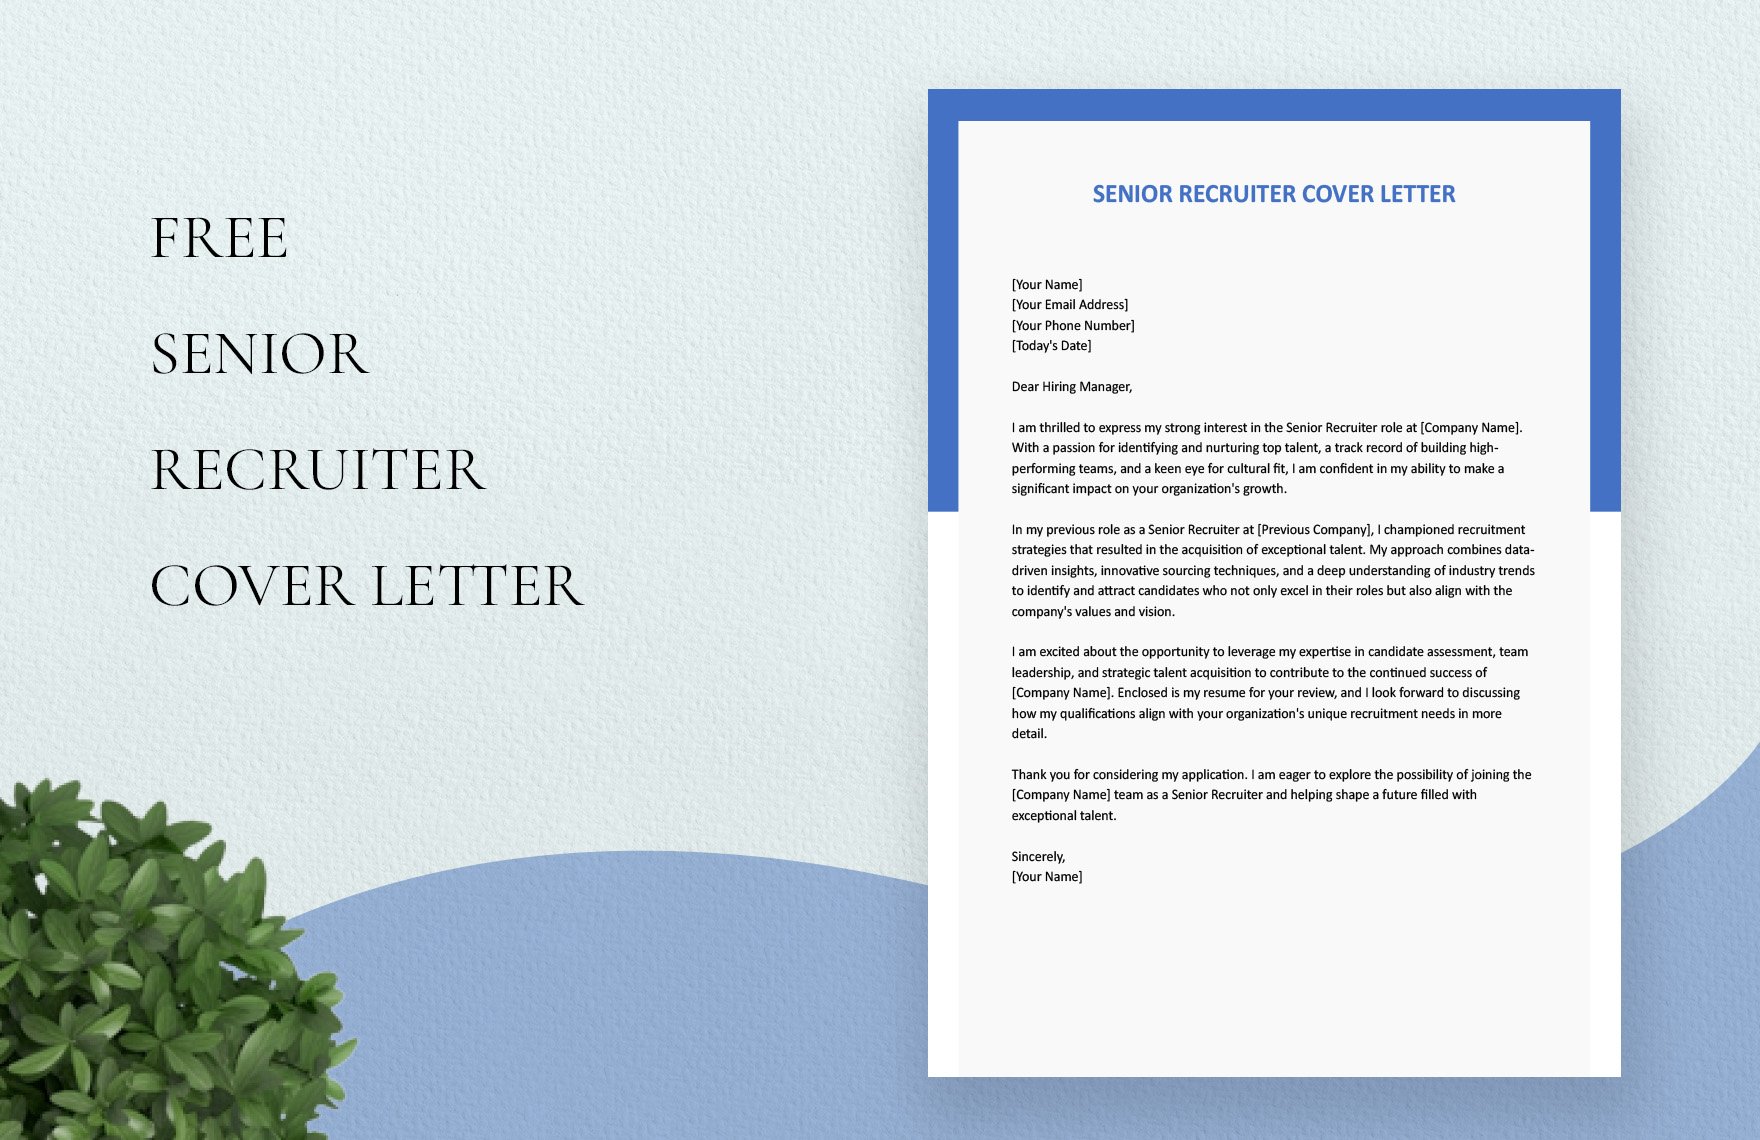 Senior Recruiter Cover Letter in Word, Google Docs - Download ...